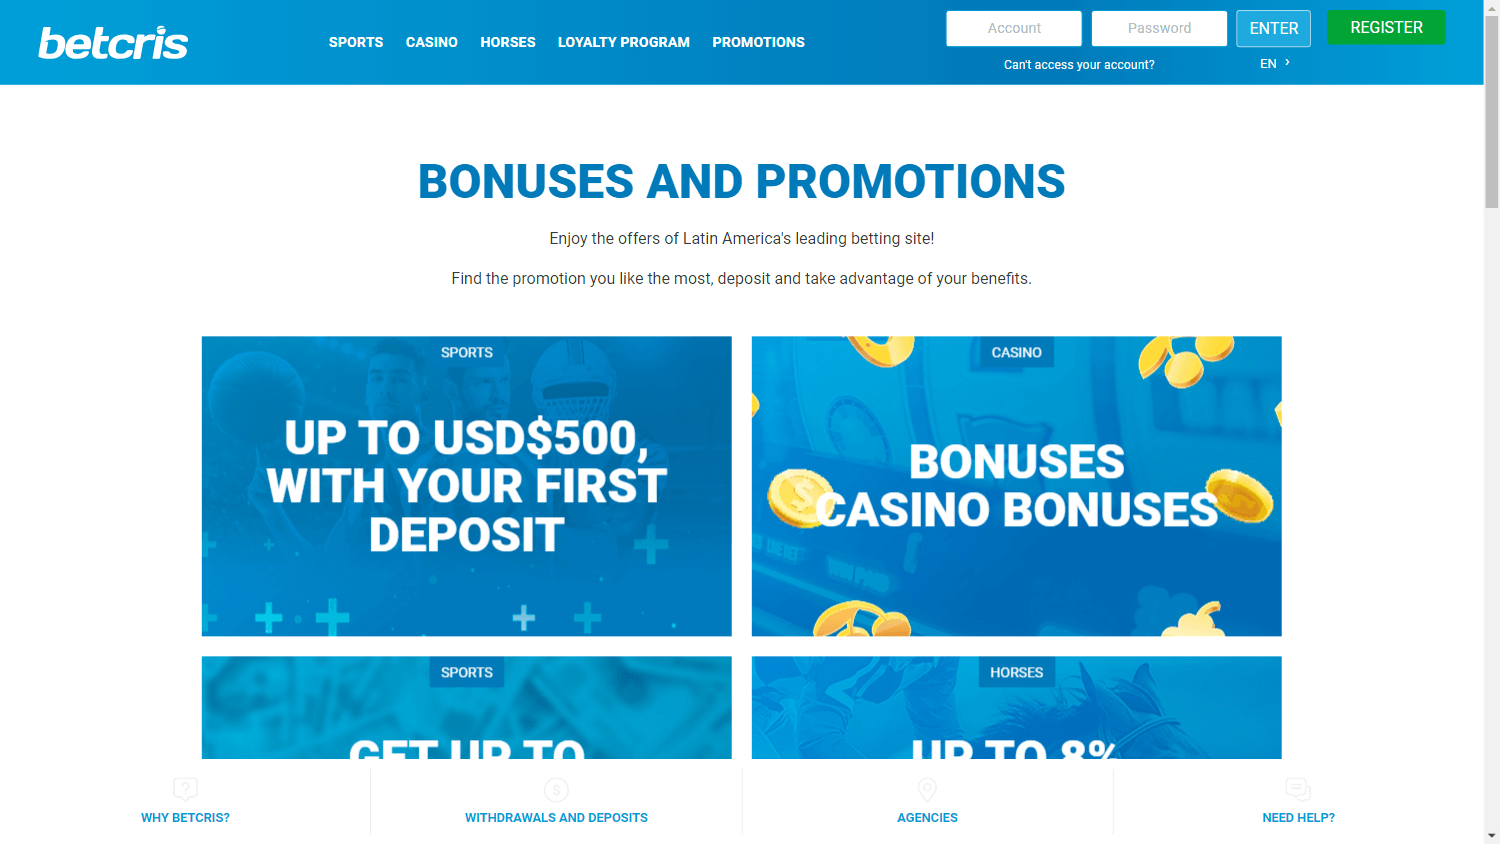 betcris_casino_promotions_desktop